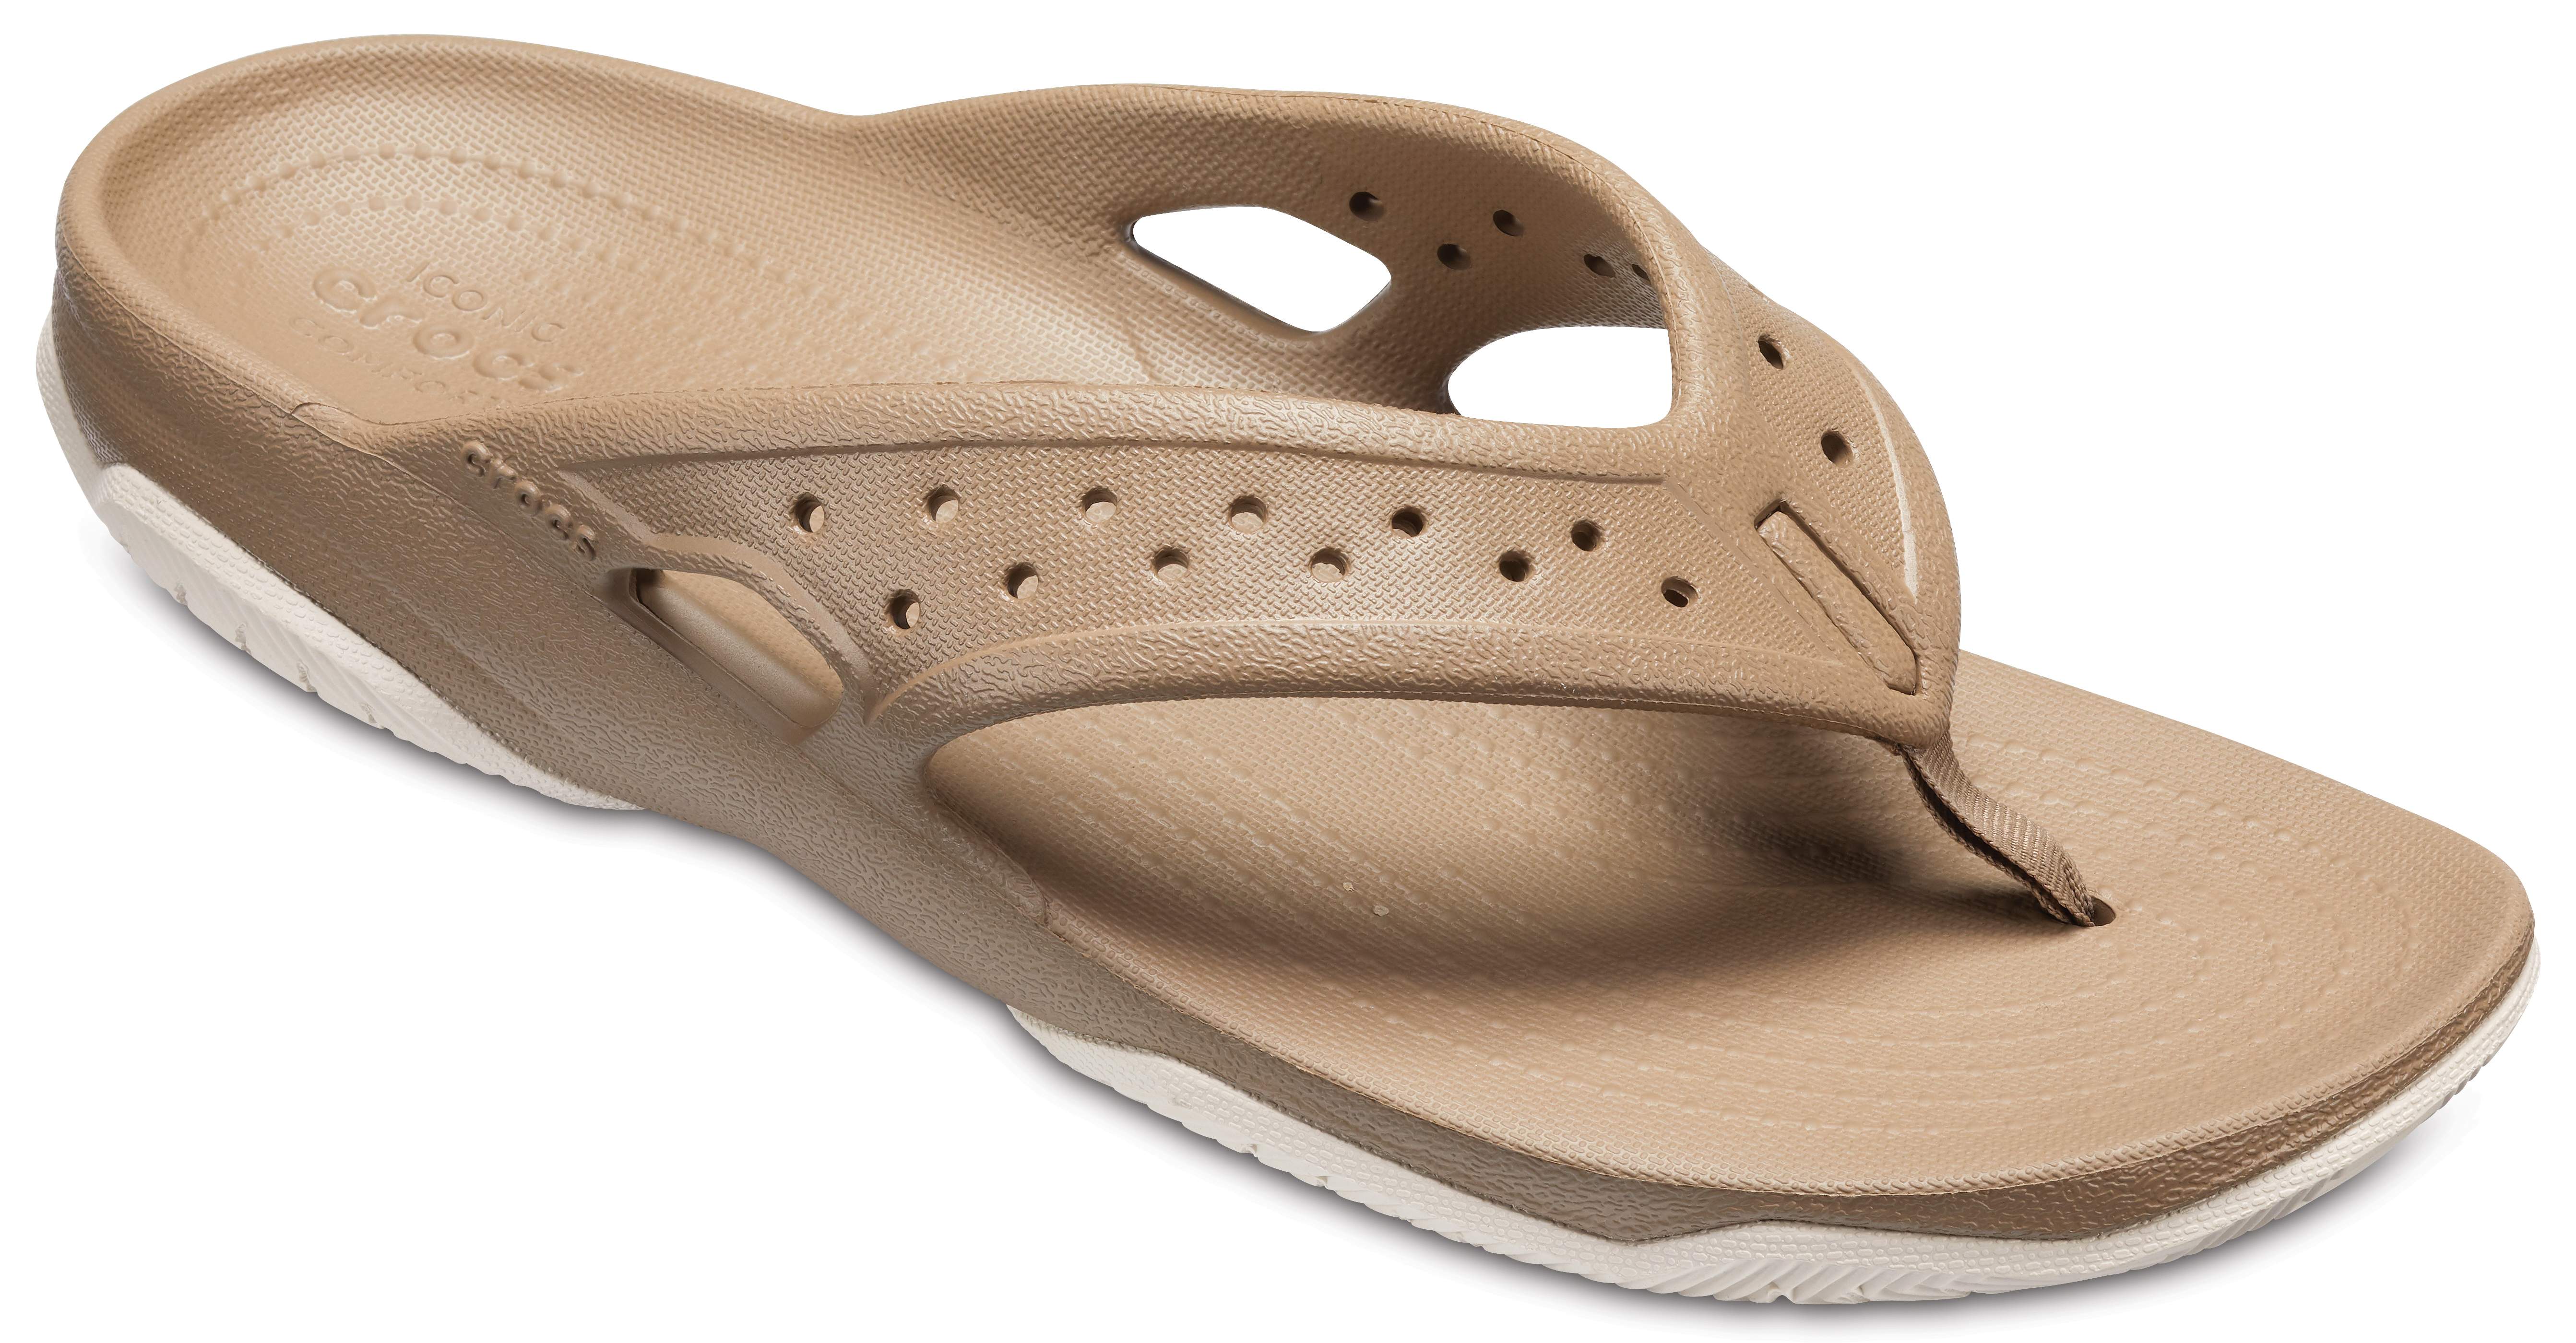 mens crocs flip flops size 13